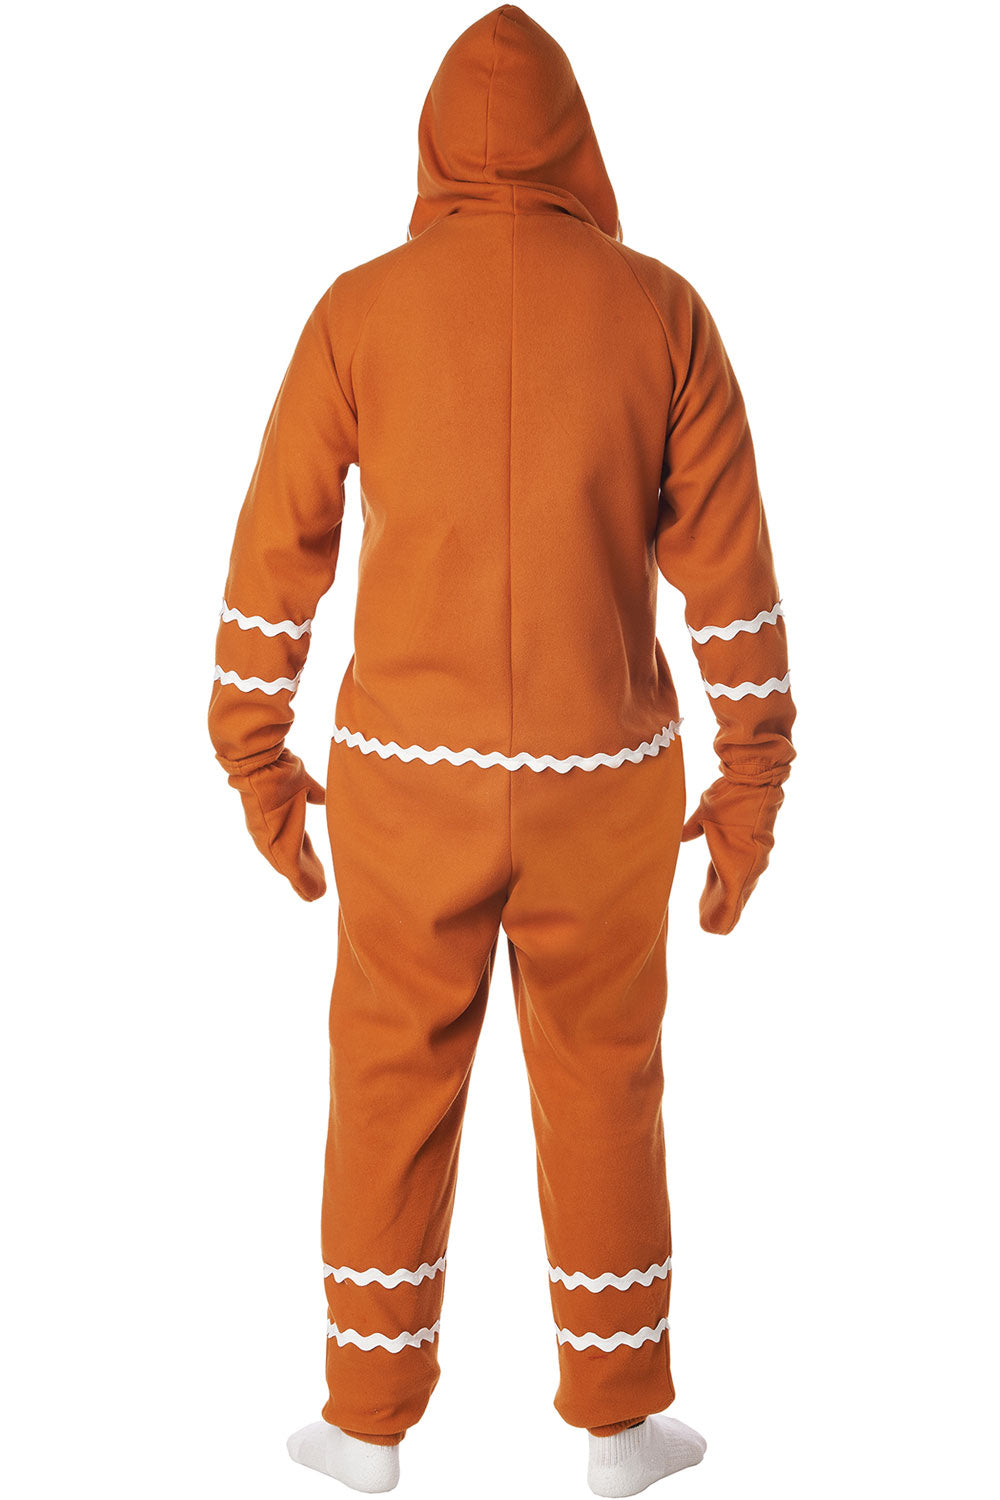 Gingerbread Onesie / Adult California Costume 5221-175